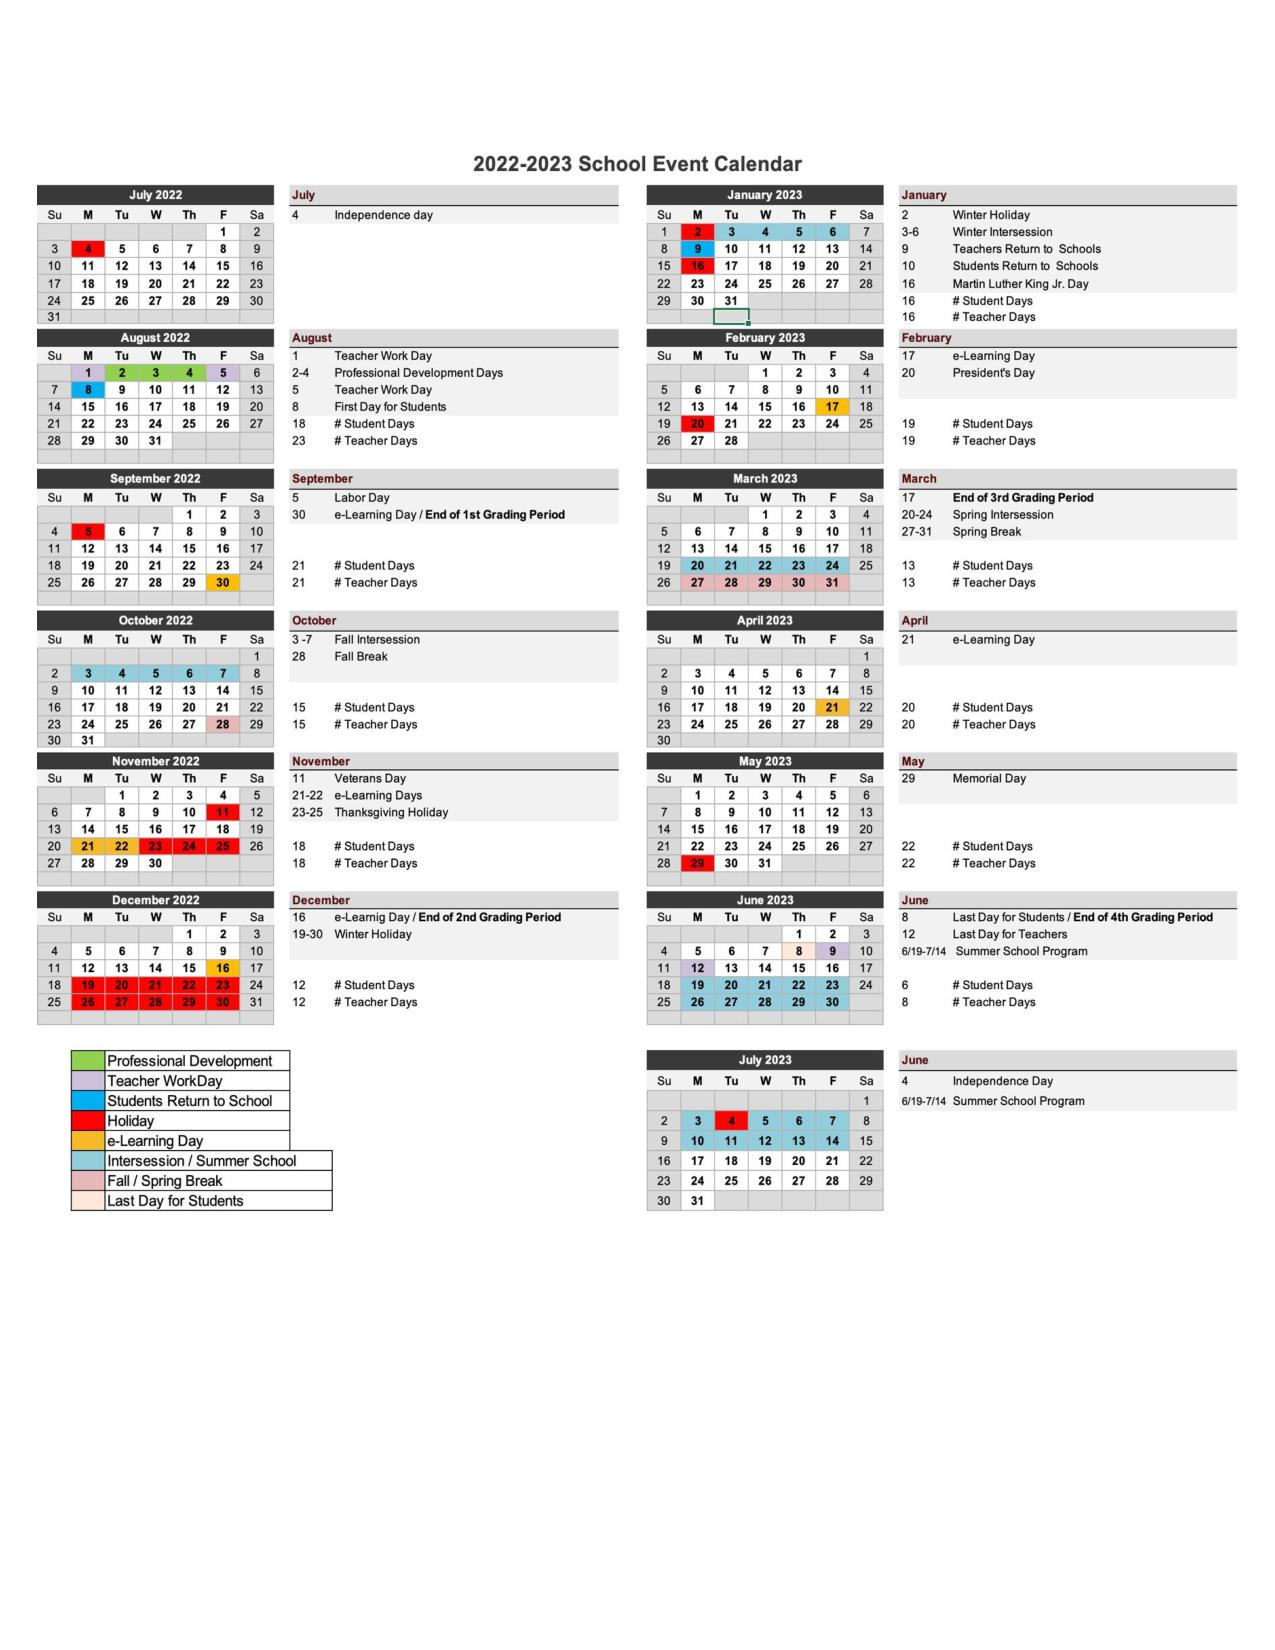 birmingham-city-schools-calendar-2022-2023-in-pdf